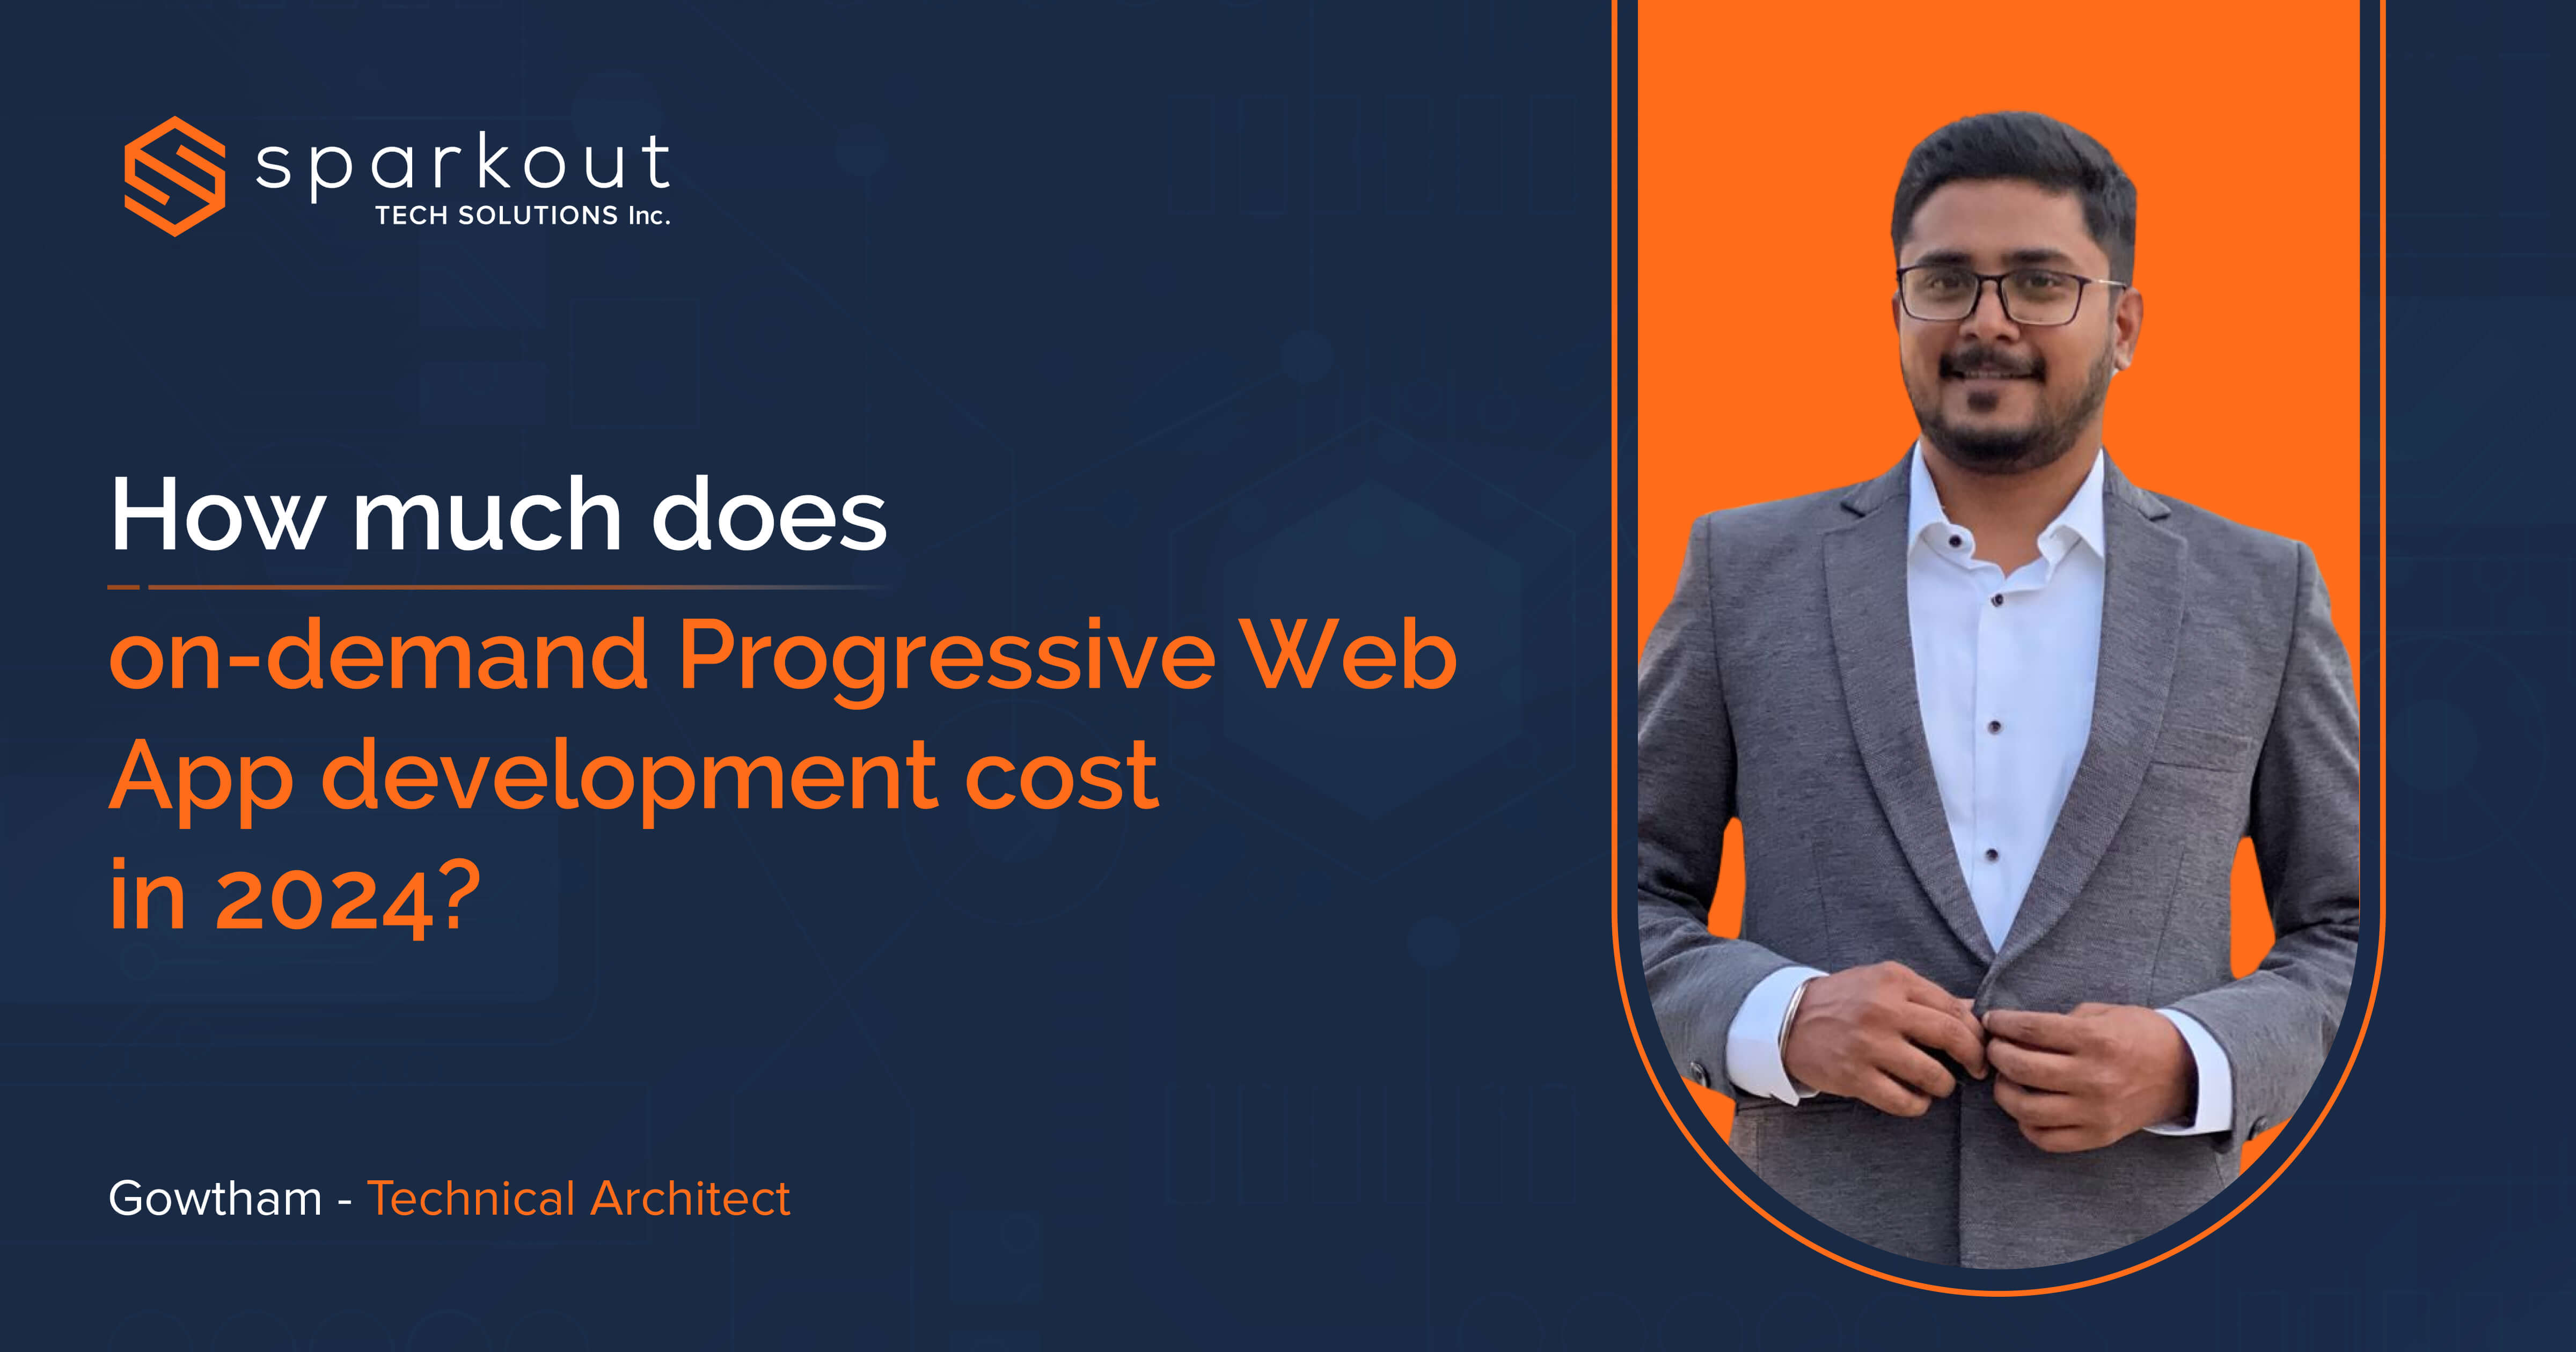 Progressive Web App development cost in 2024